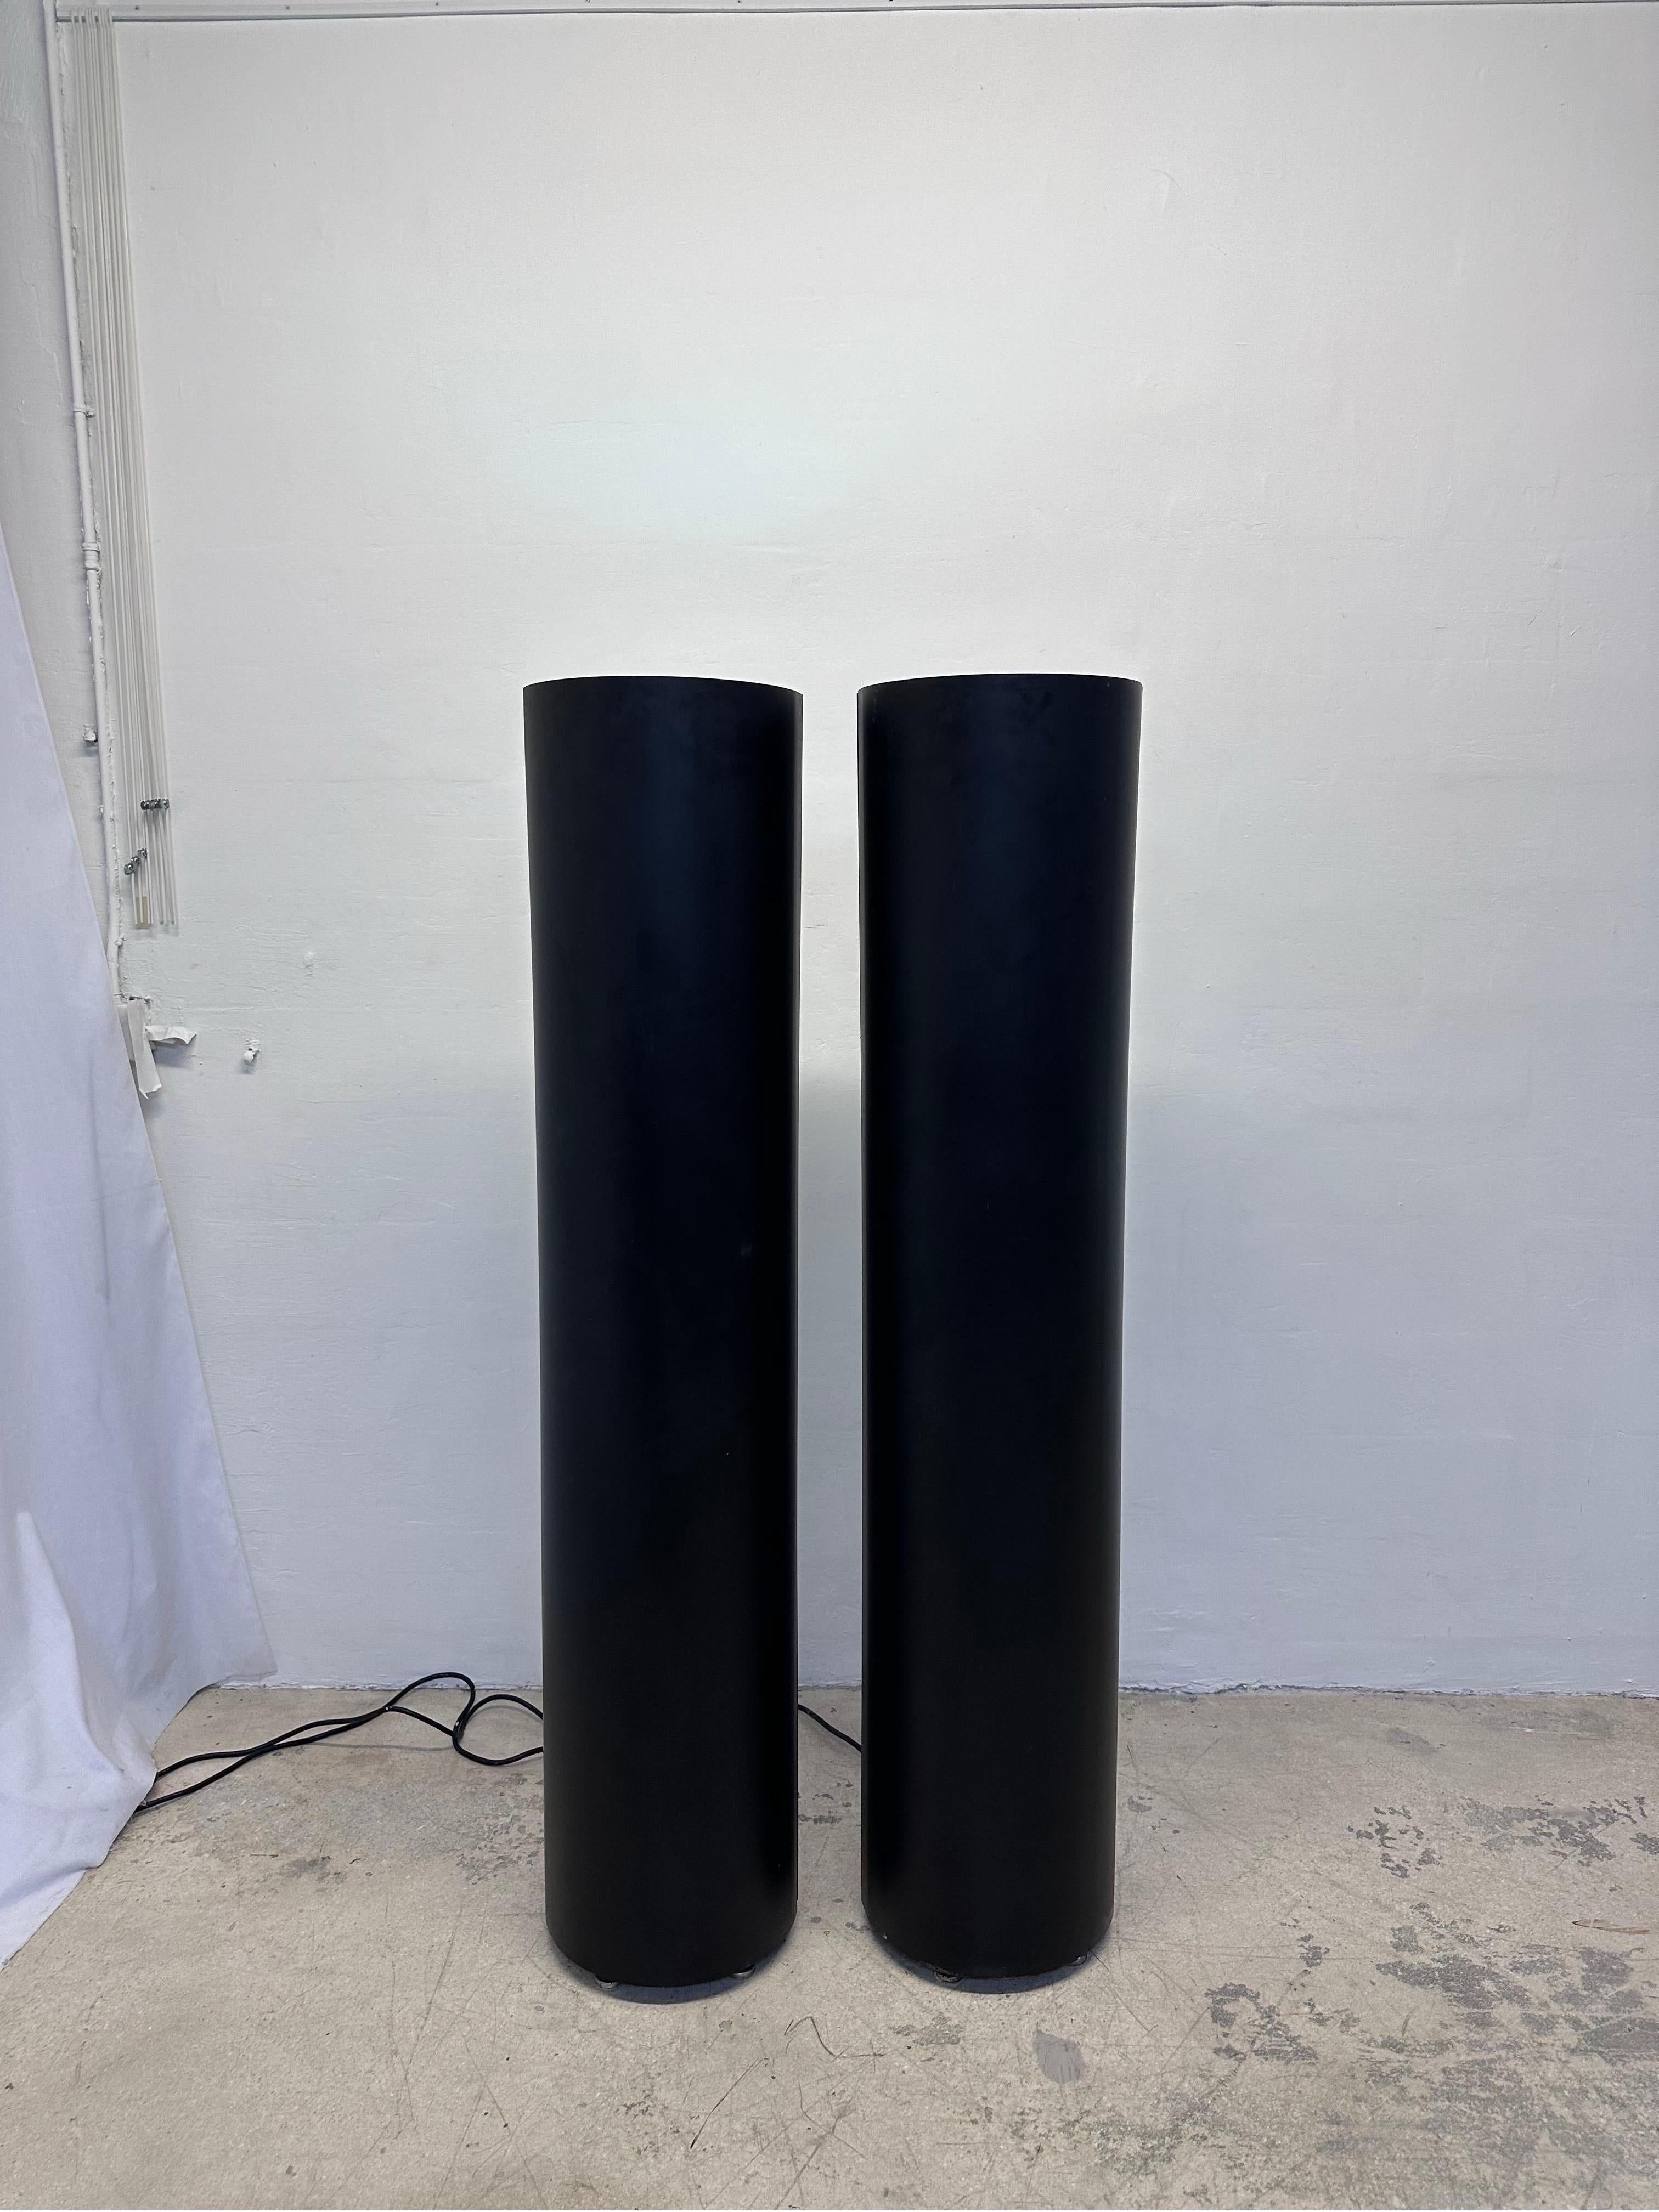 Postmodern Black Torchiere Mercury Bulb Floor Lamps - a Pair For Sale 4